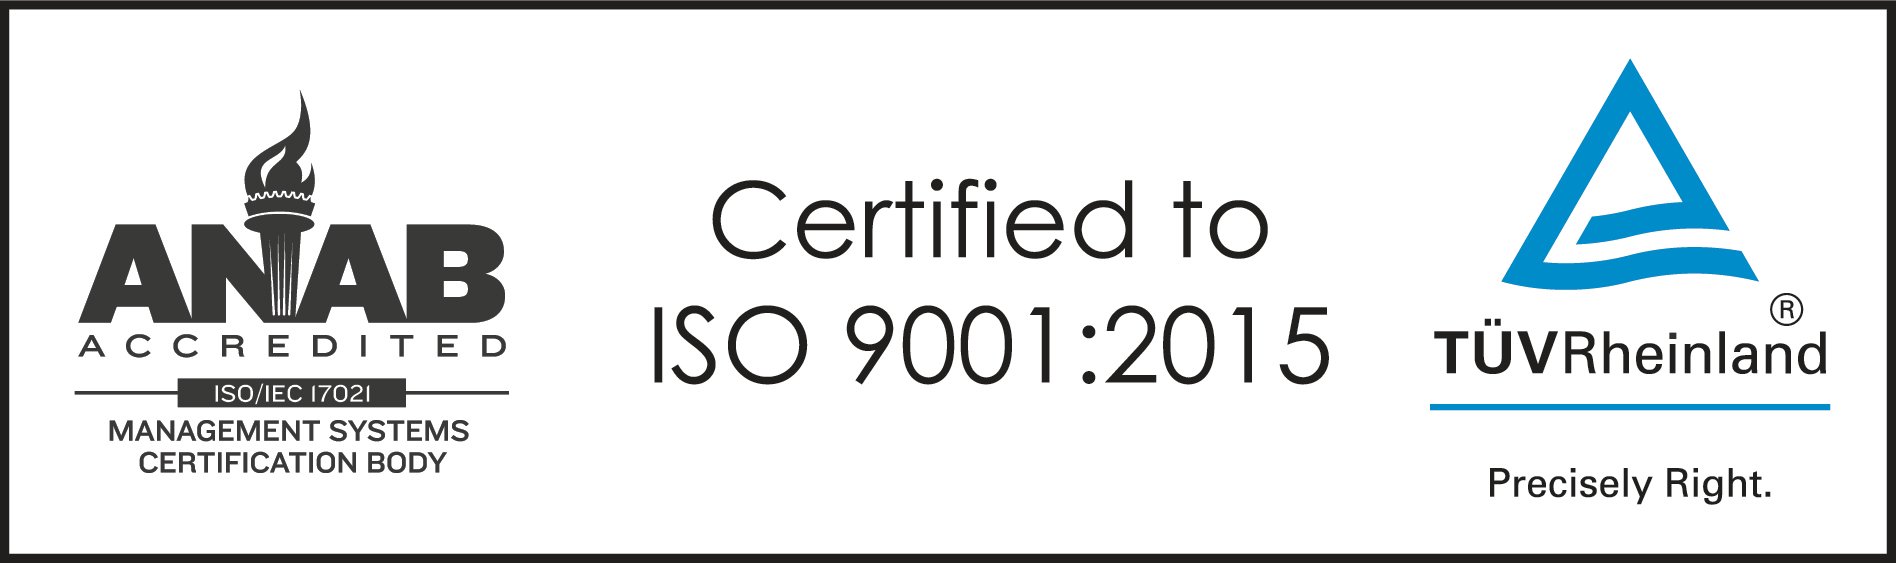 03_ISO 9001-2015_horizontal-BW-Colour (002).jpg